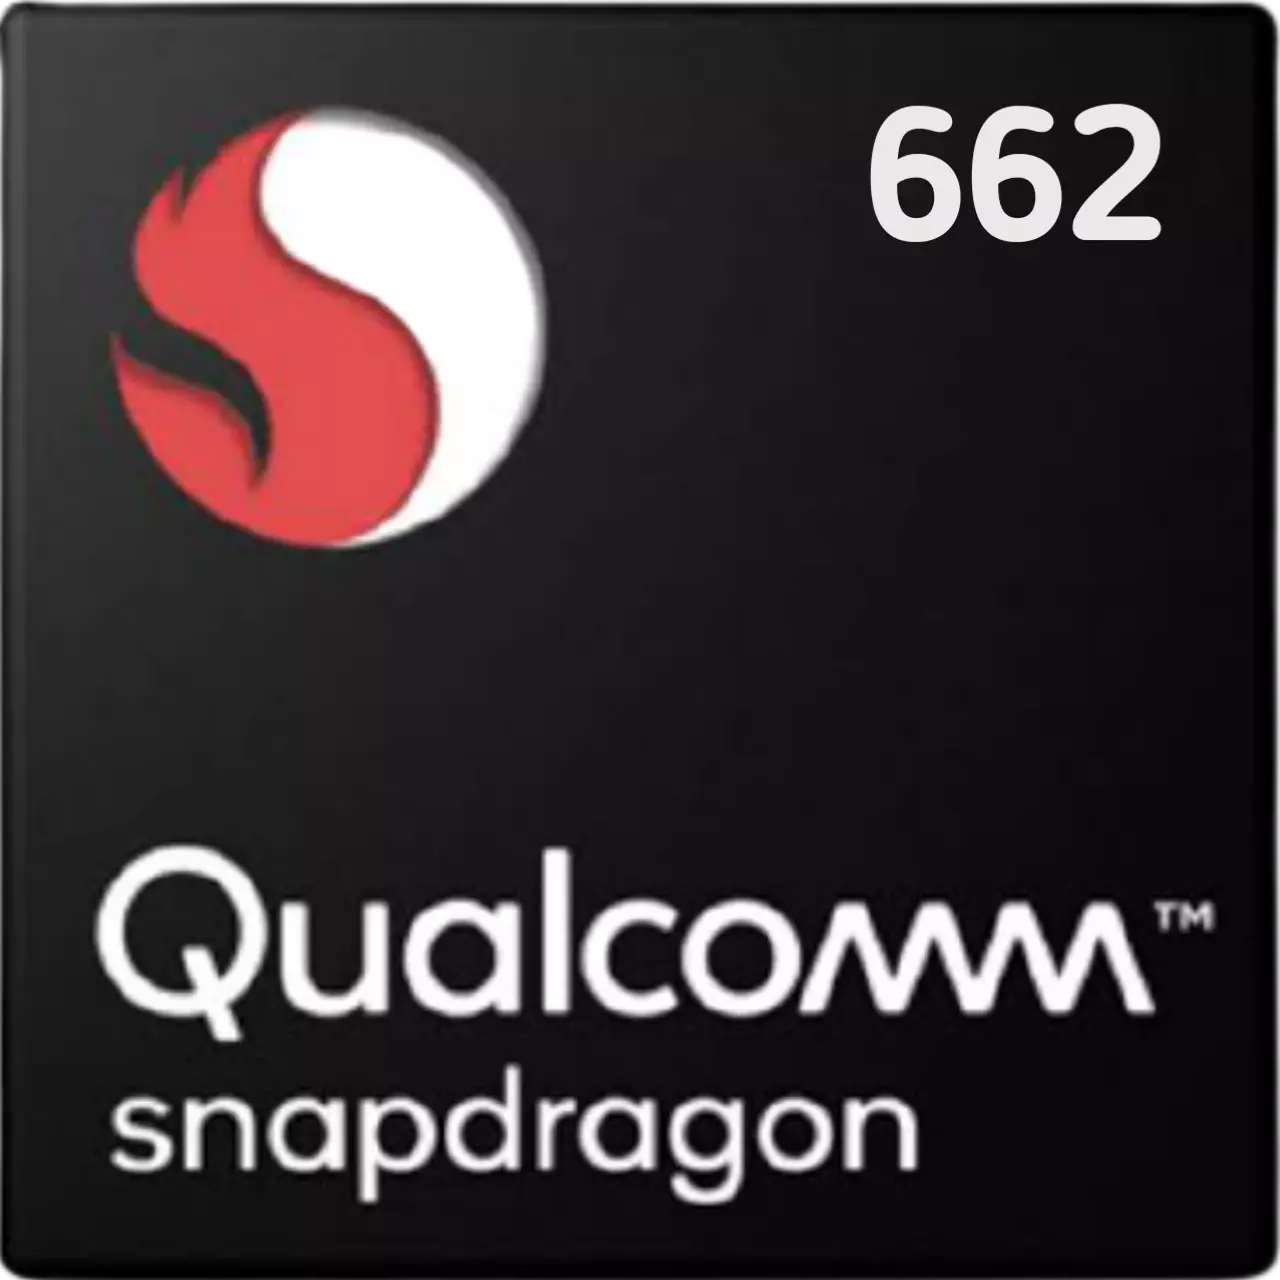 MediaTek Helio G85 vs Snapdragon 662 - Detailed Comparison